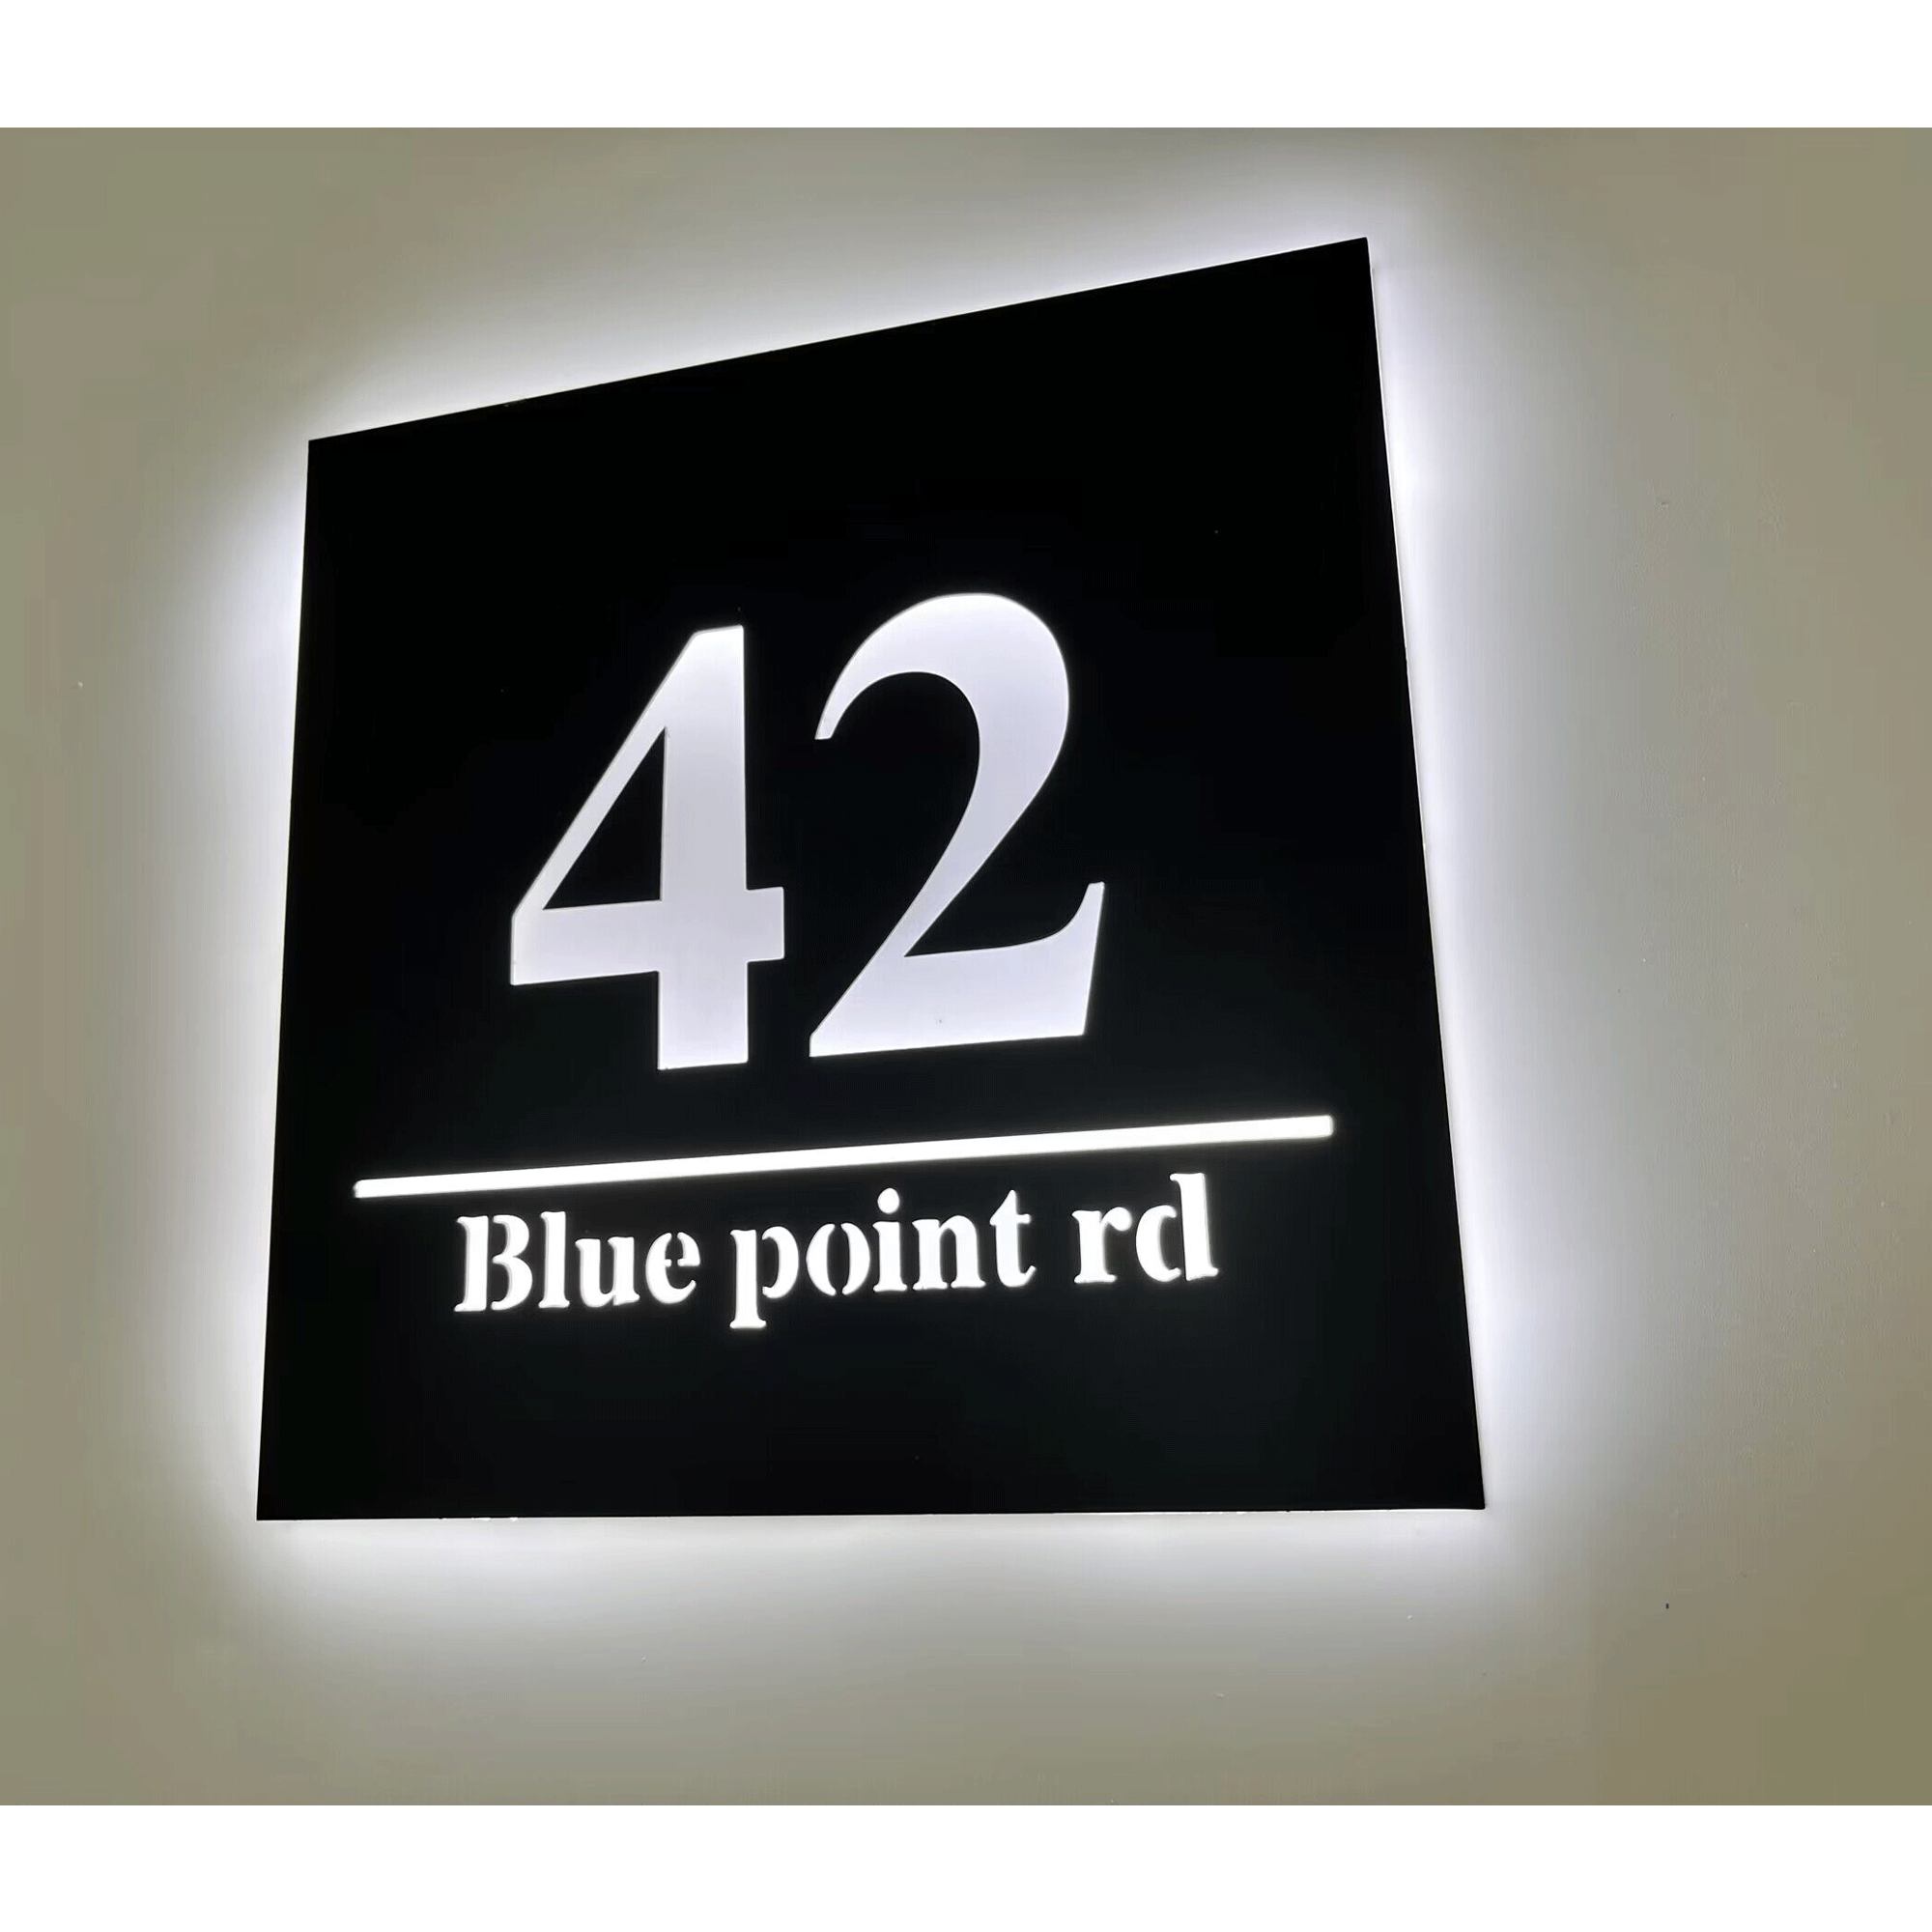 Illuminated House Number Address Plaque Light Box Waterproof Exterior